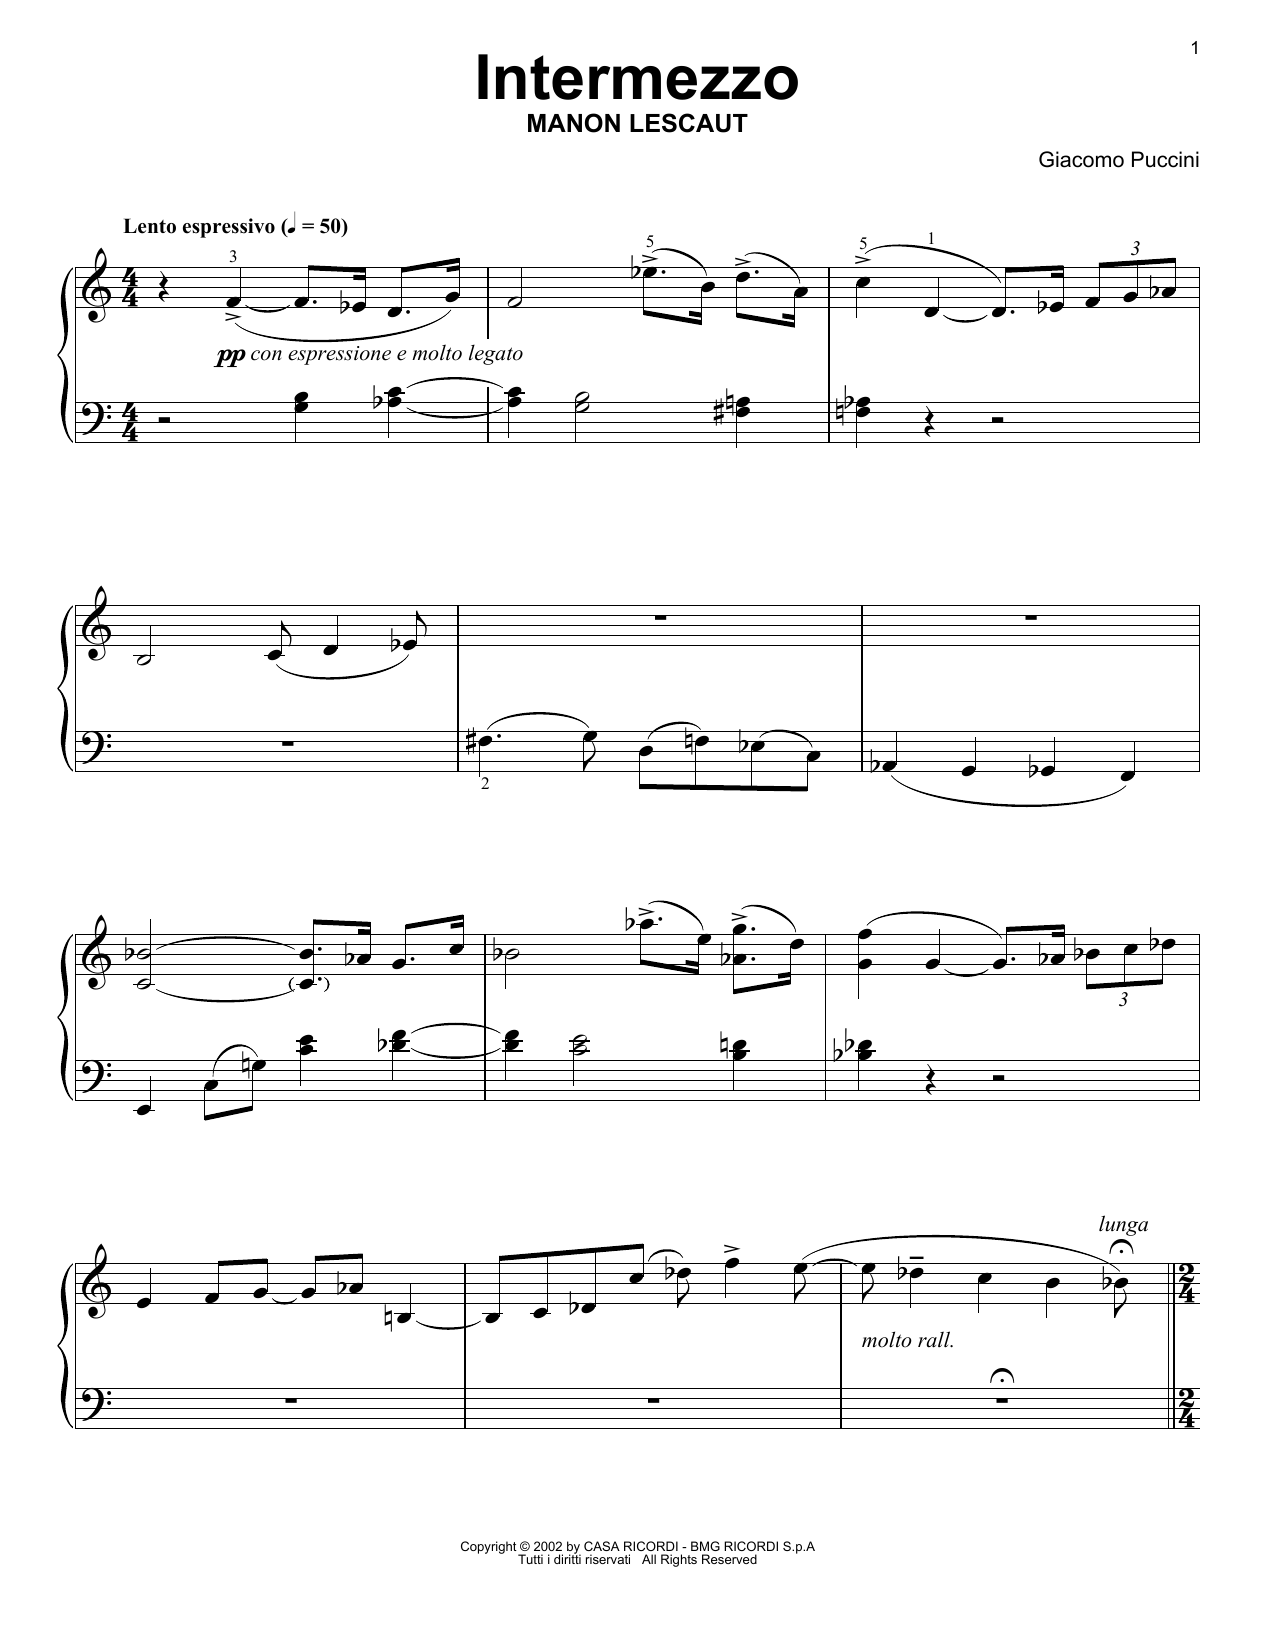 Giacomo Puccini Intermezzo Sheet Music Notes & Chords for Easy Piano Solo - Download or Print PDF